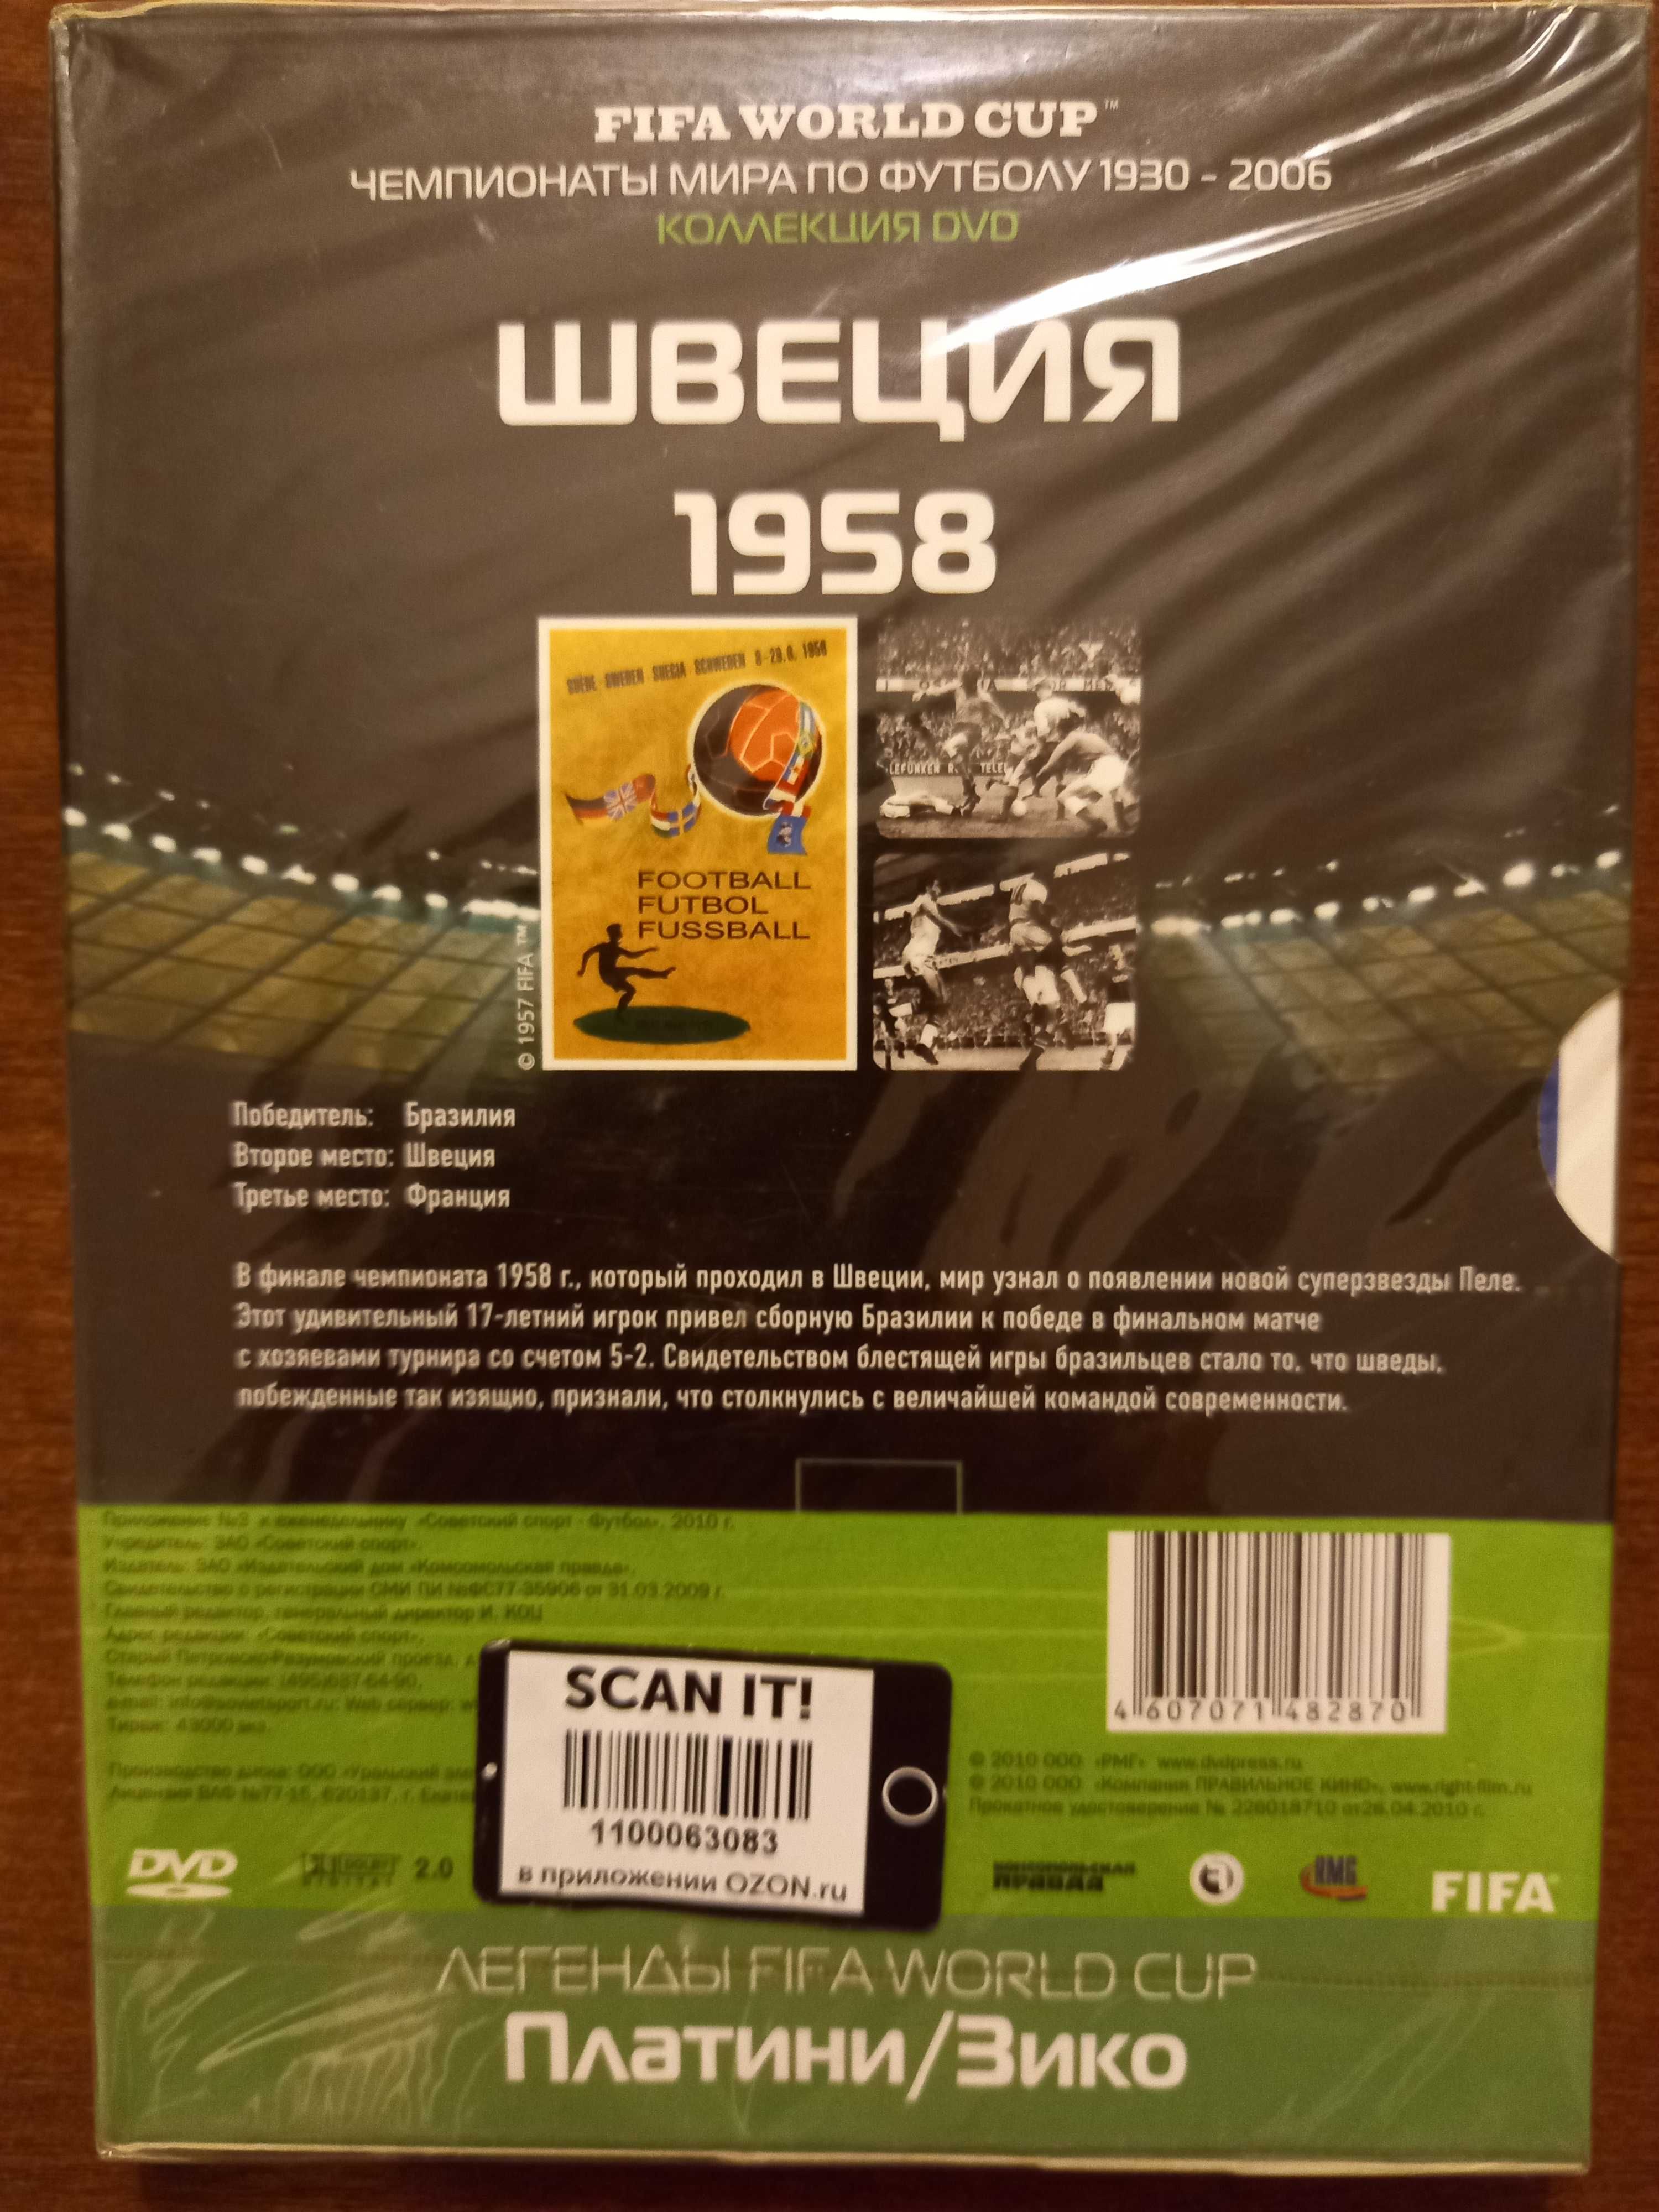 DVD из коллекции FIFA World Cup. Швеция 1958